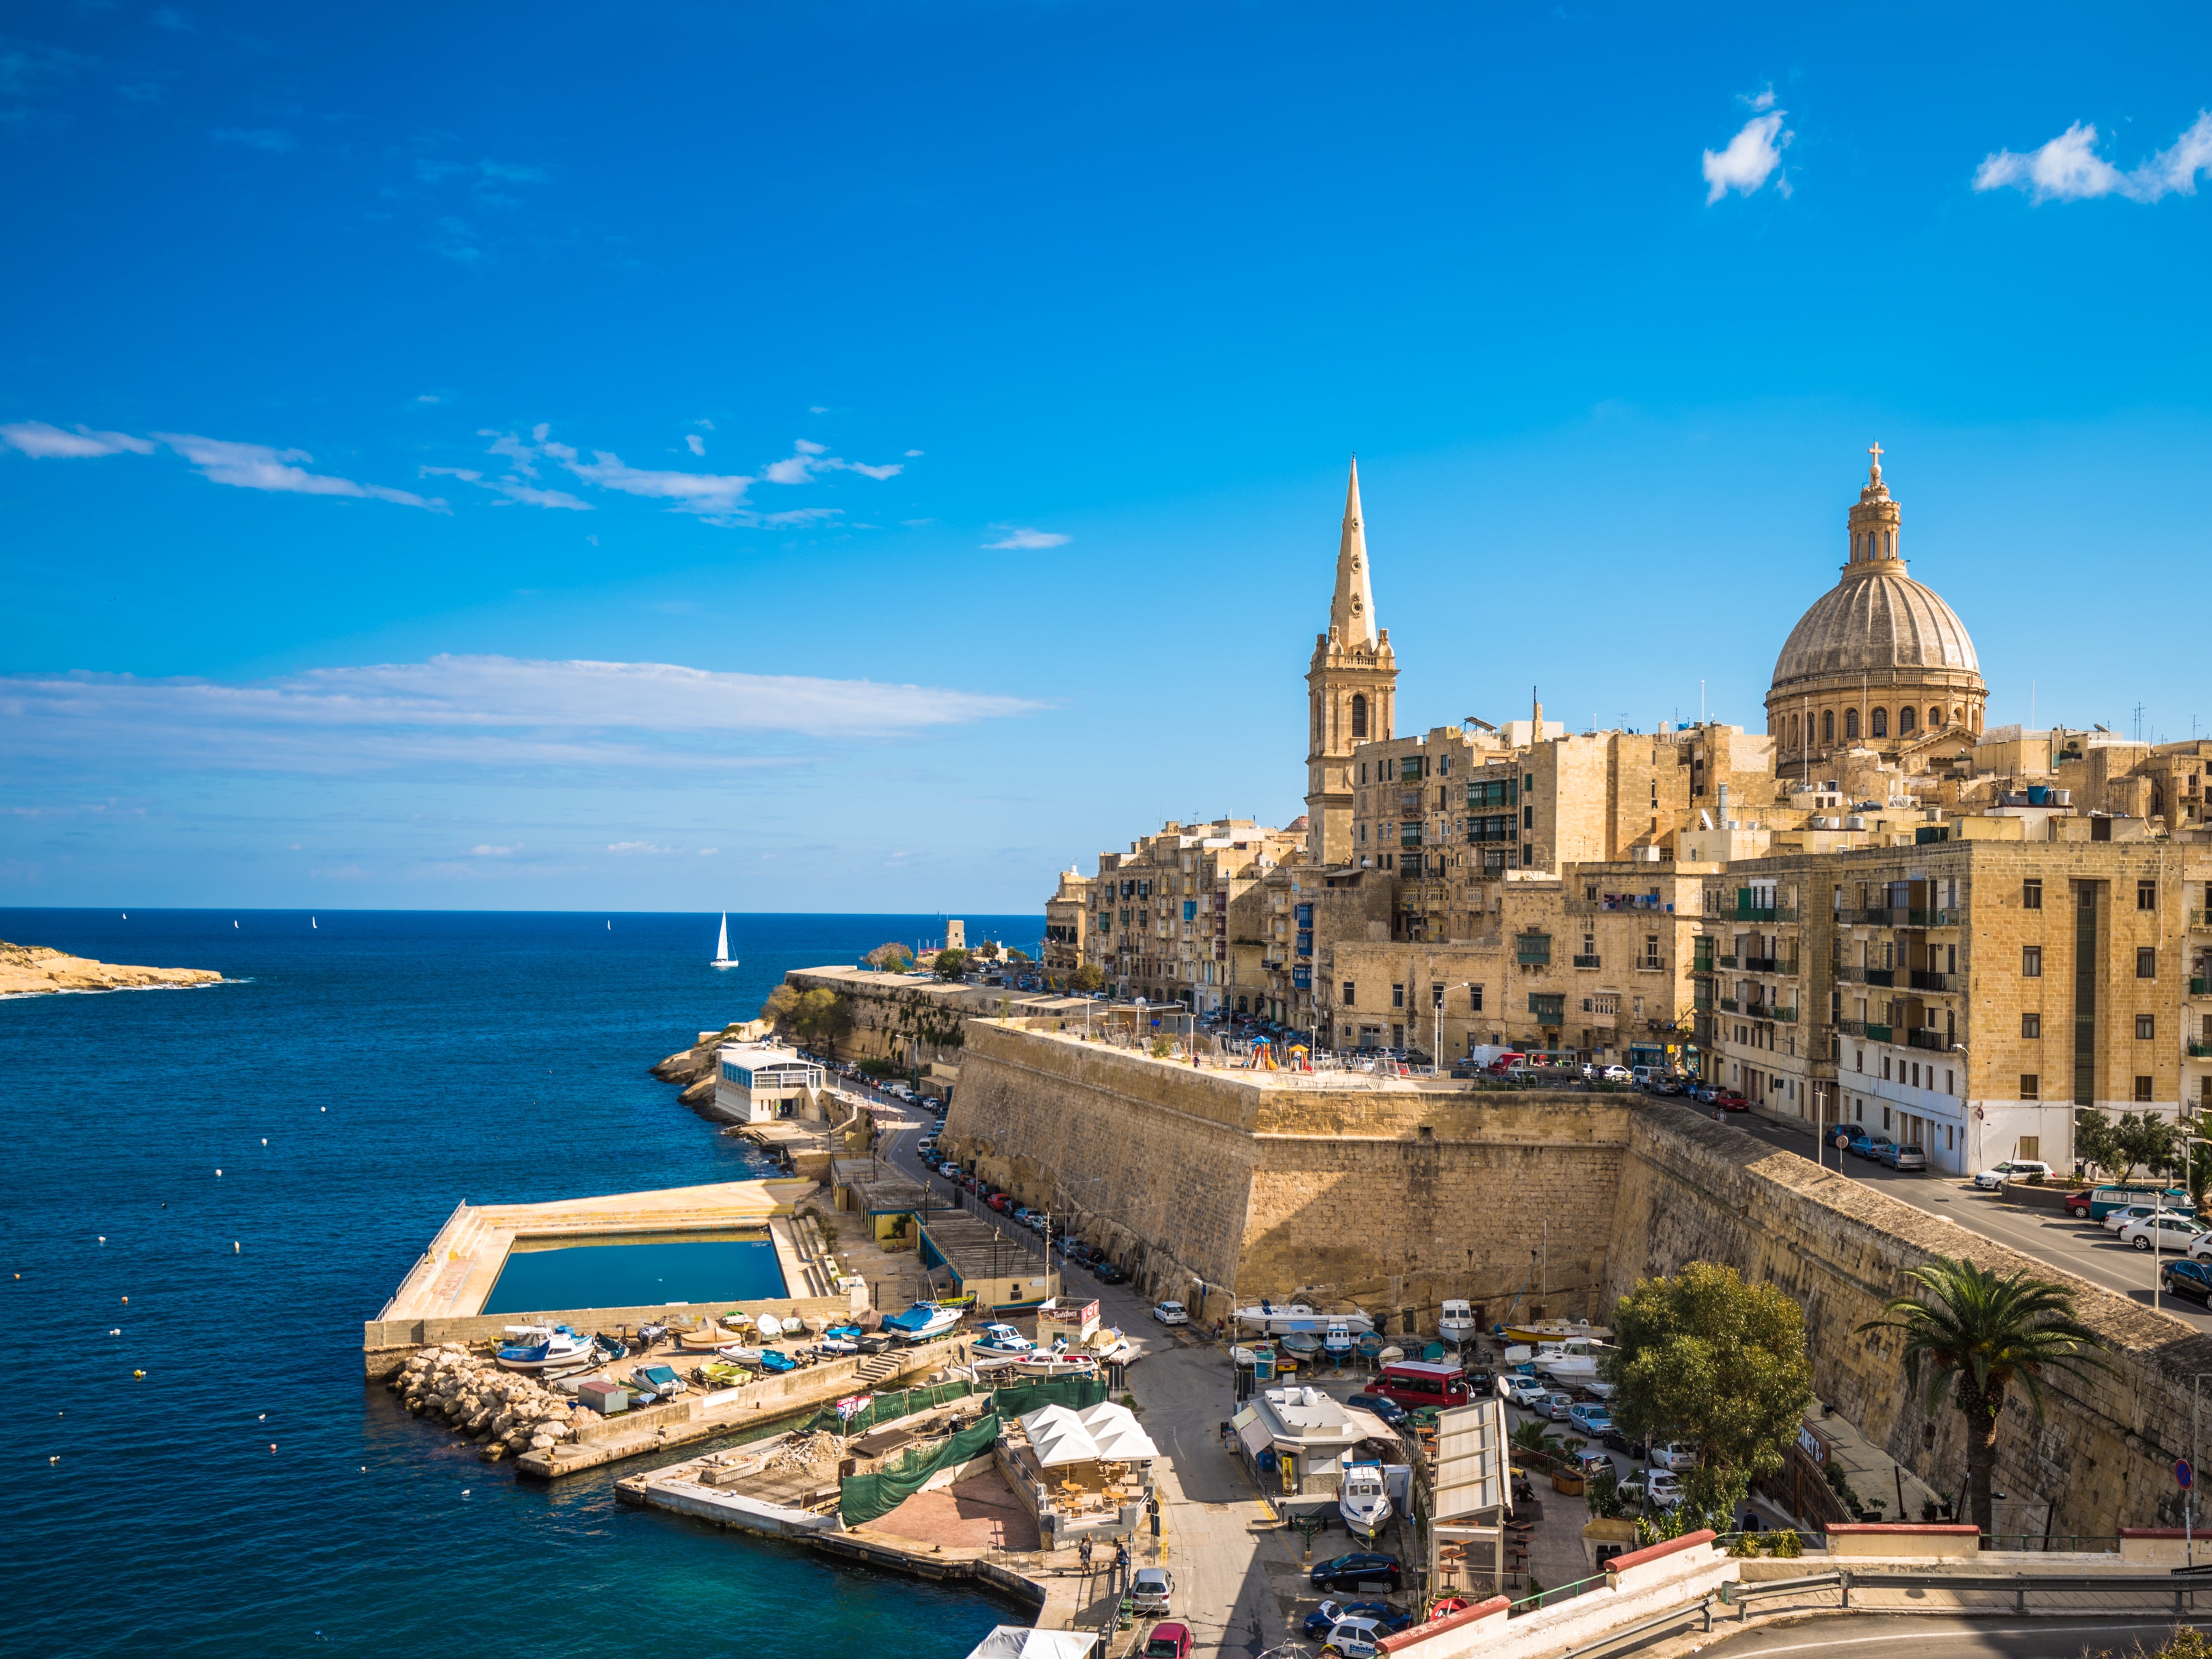 Valletta, the Maltese capital